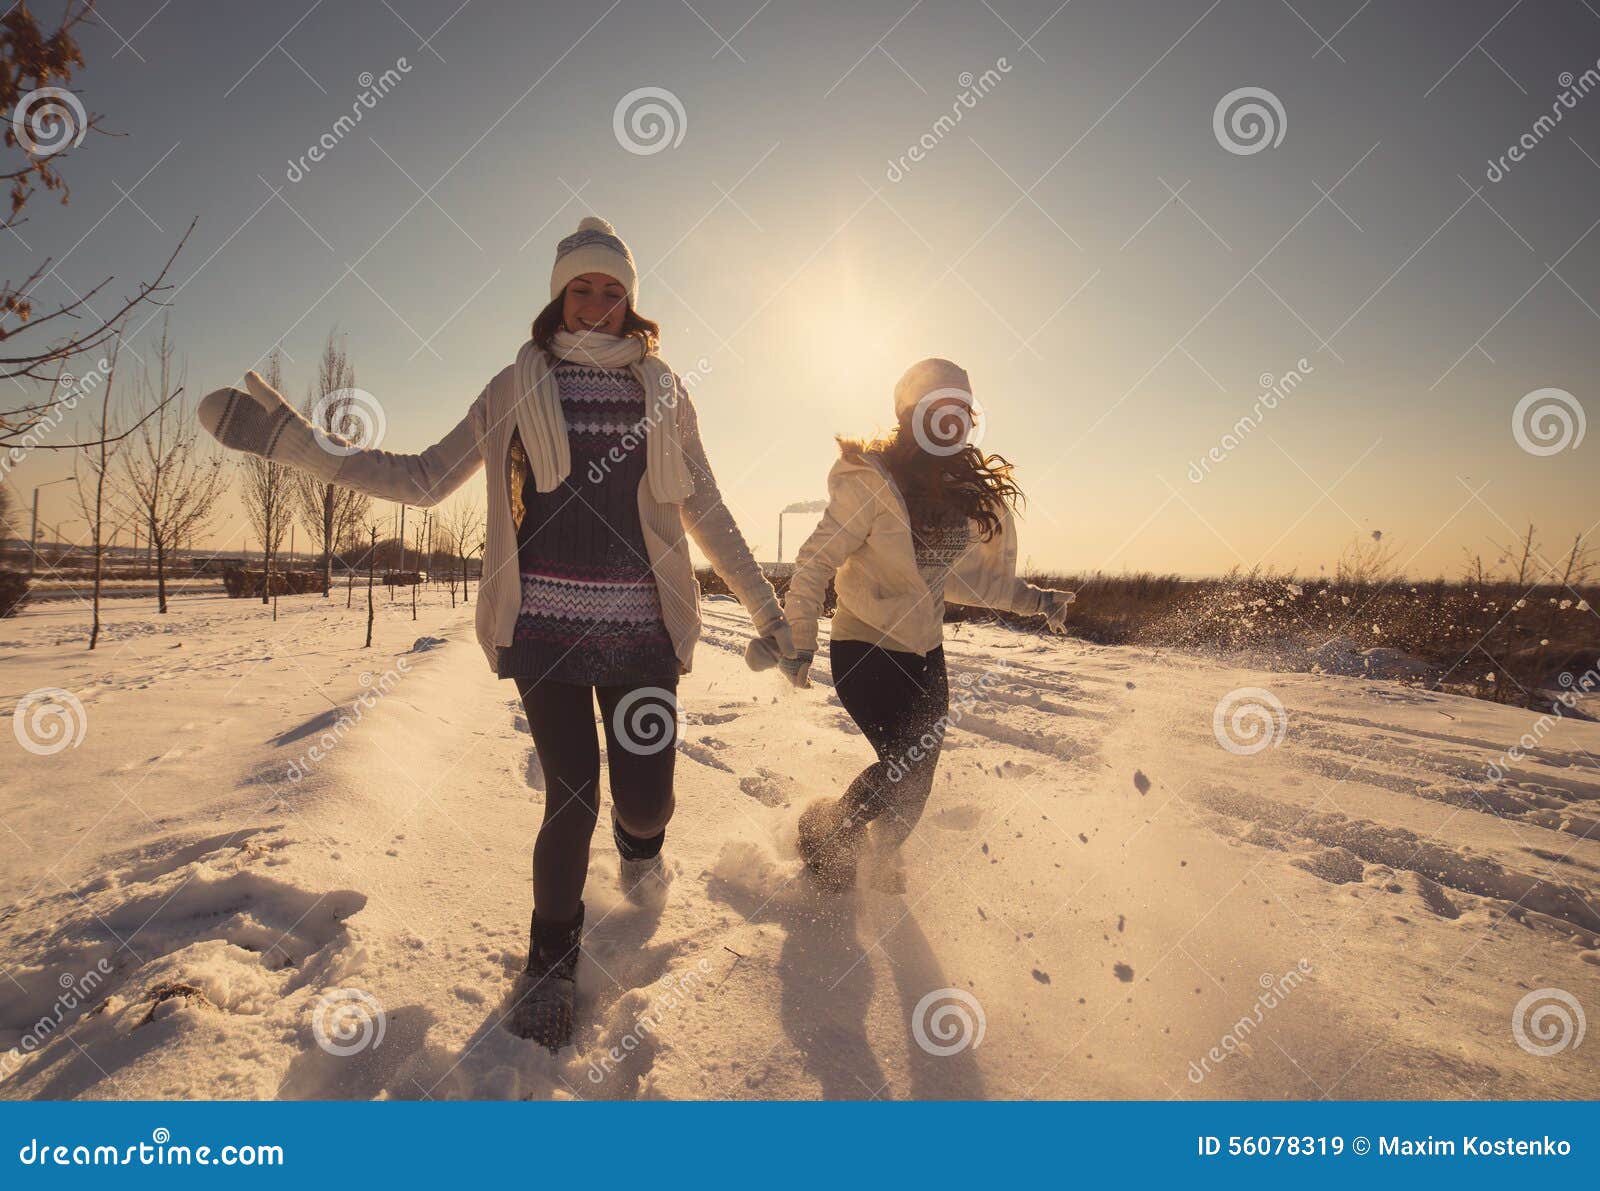 nude girlfriends in snow